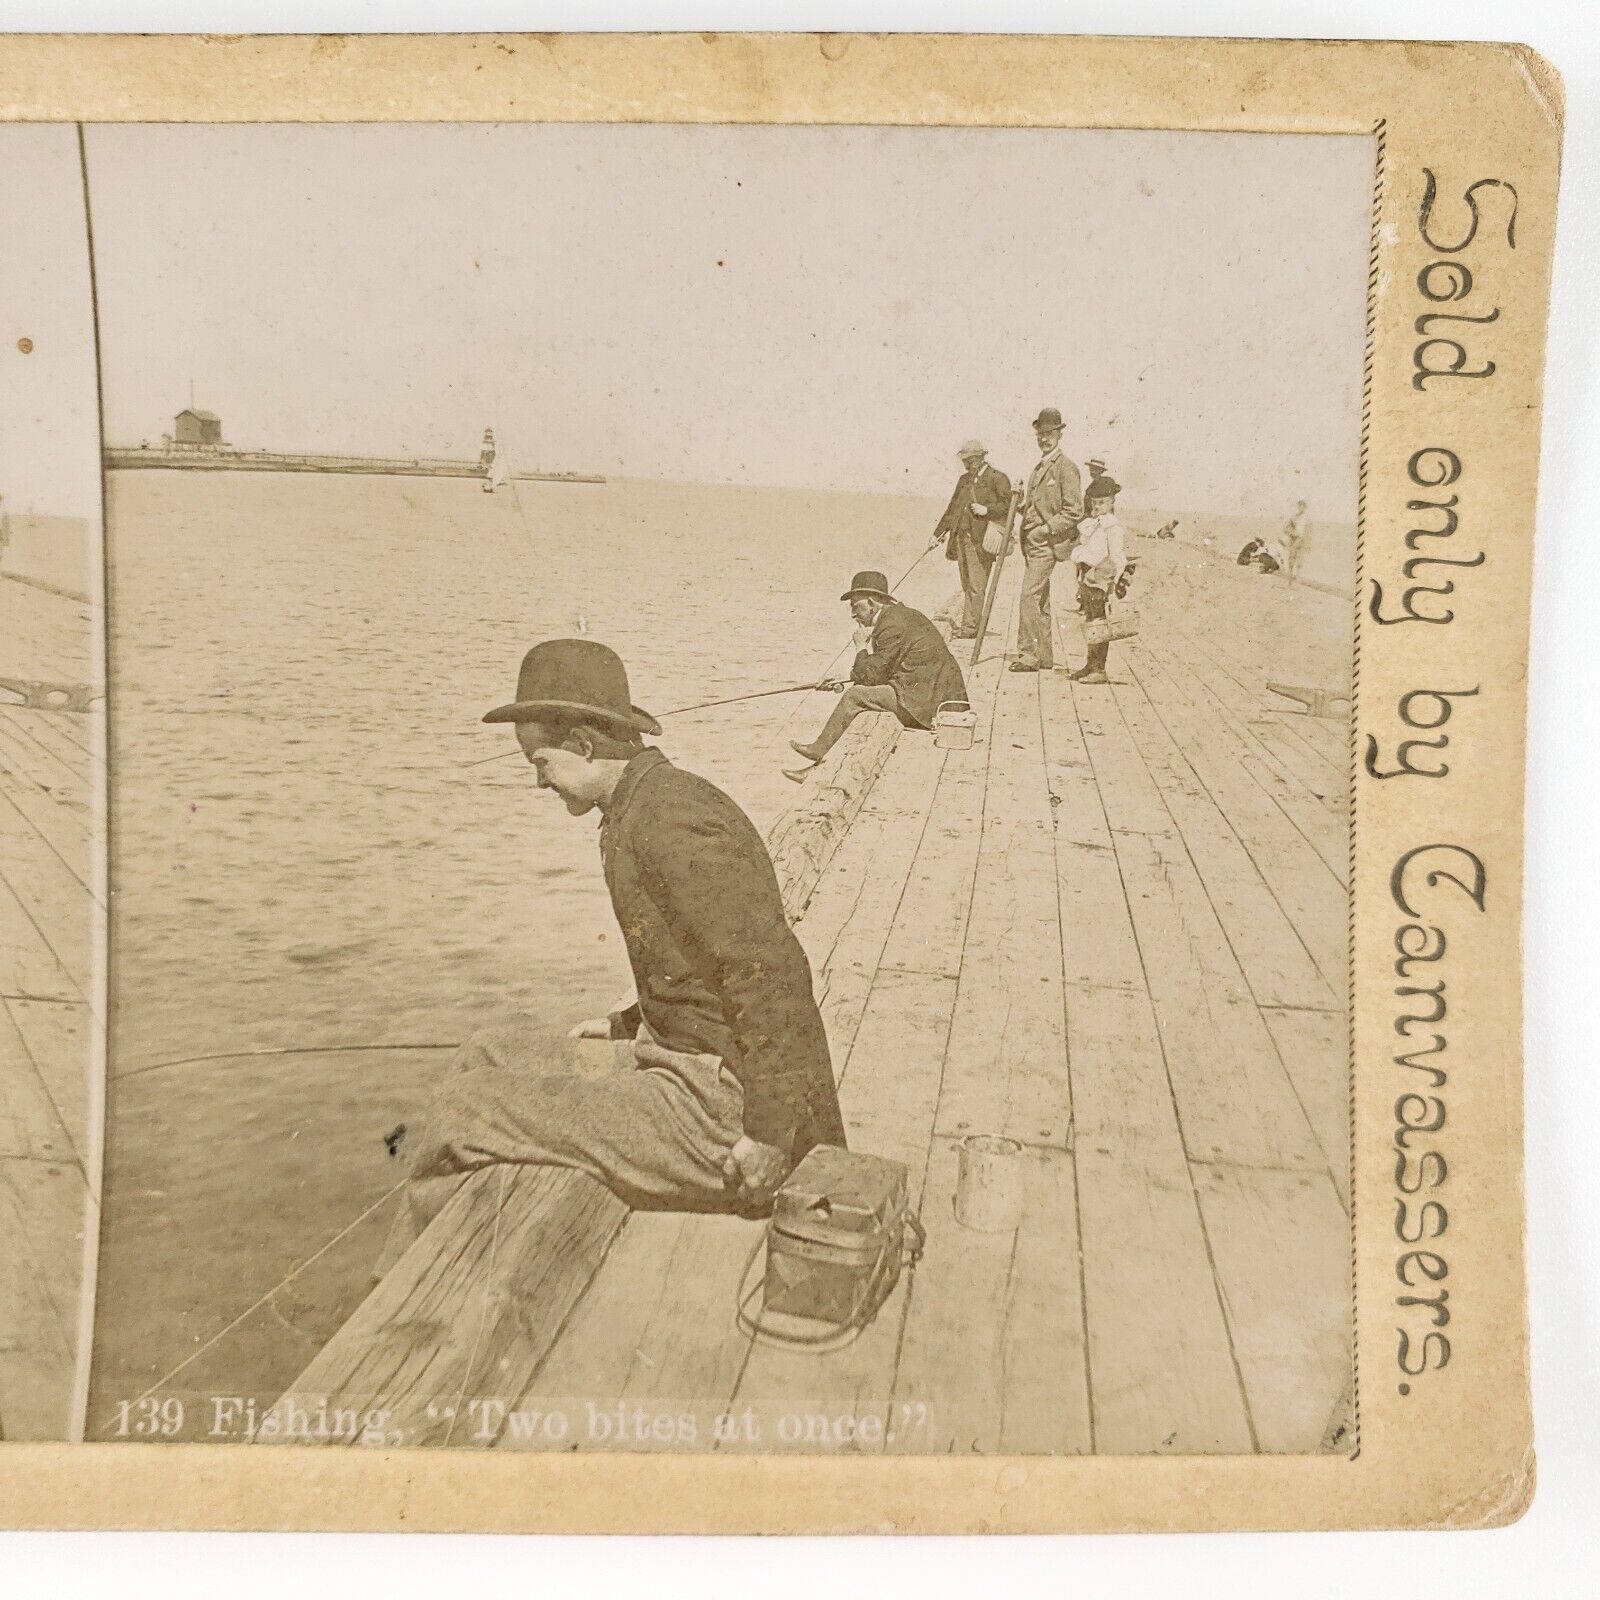 Men Fishing Off Dock Stereoview c1885 Bowler Hat Fishermen Pier Photo Card B2019